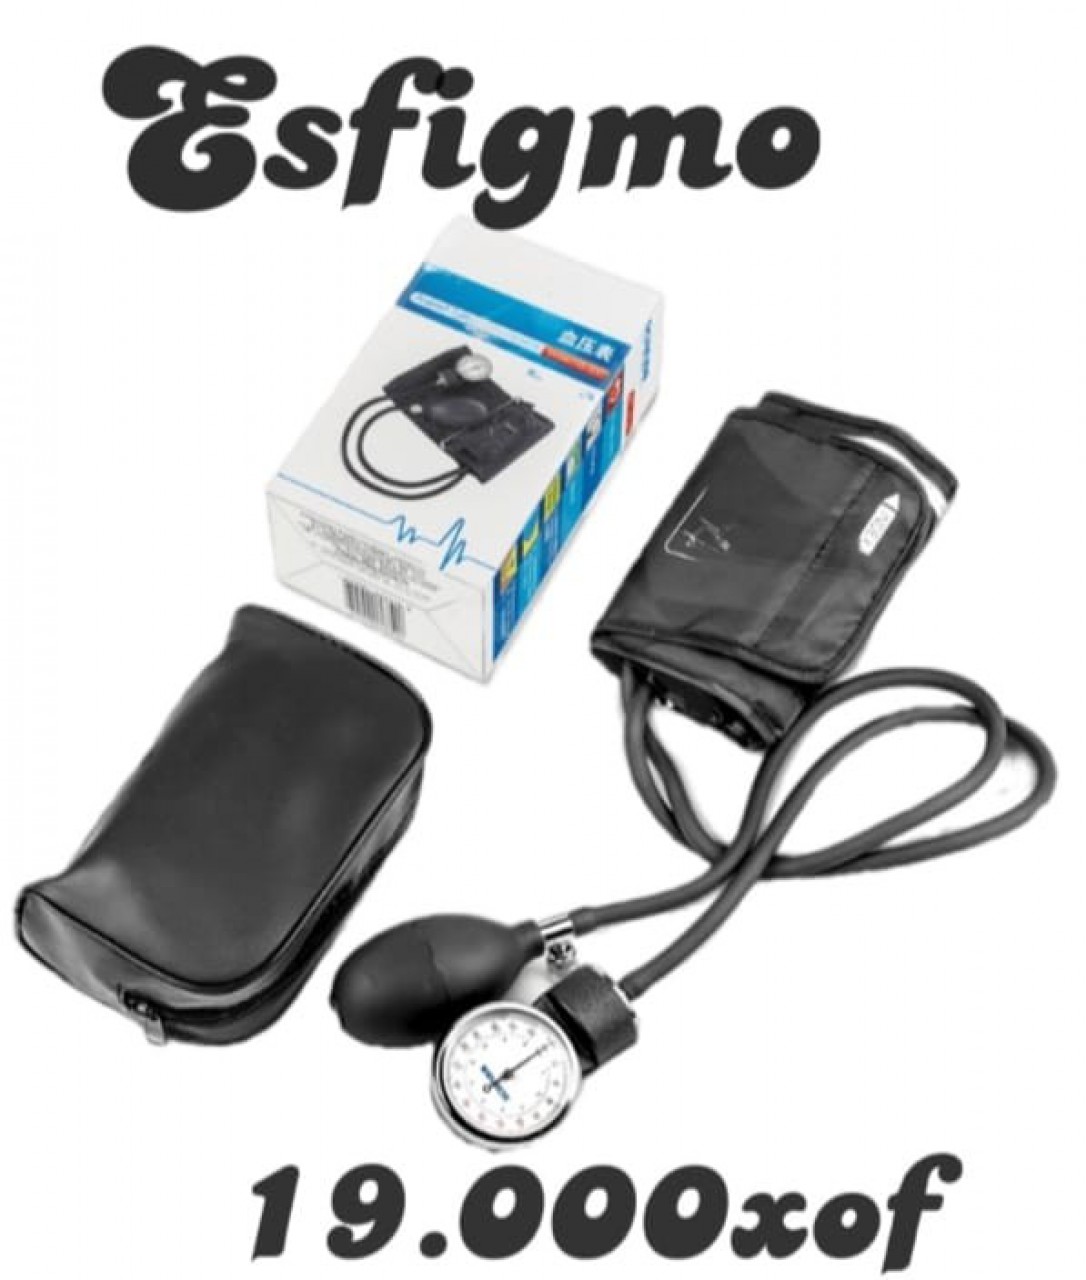 Esfigmomanômetro Manual, Dispositivos Médicos, Bissau